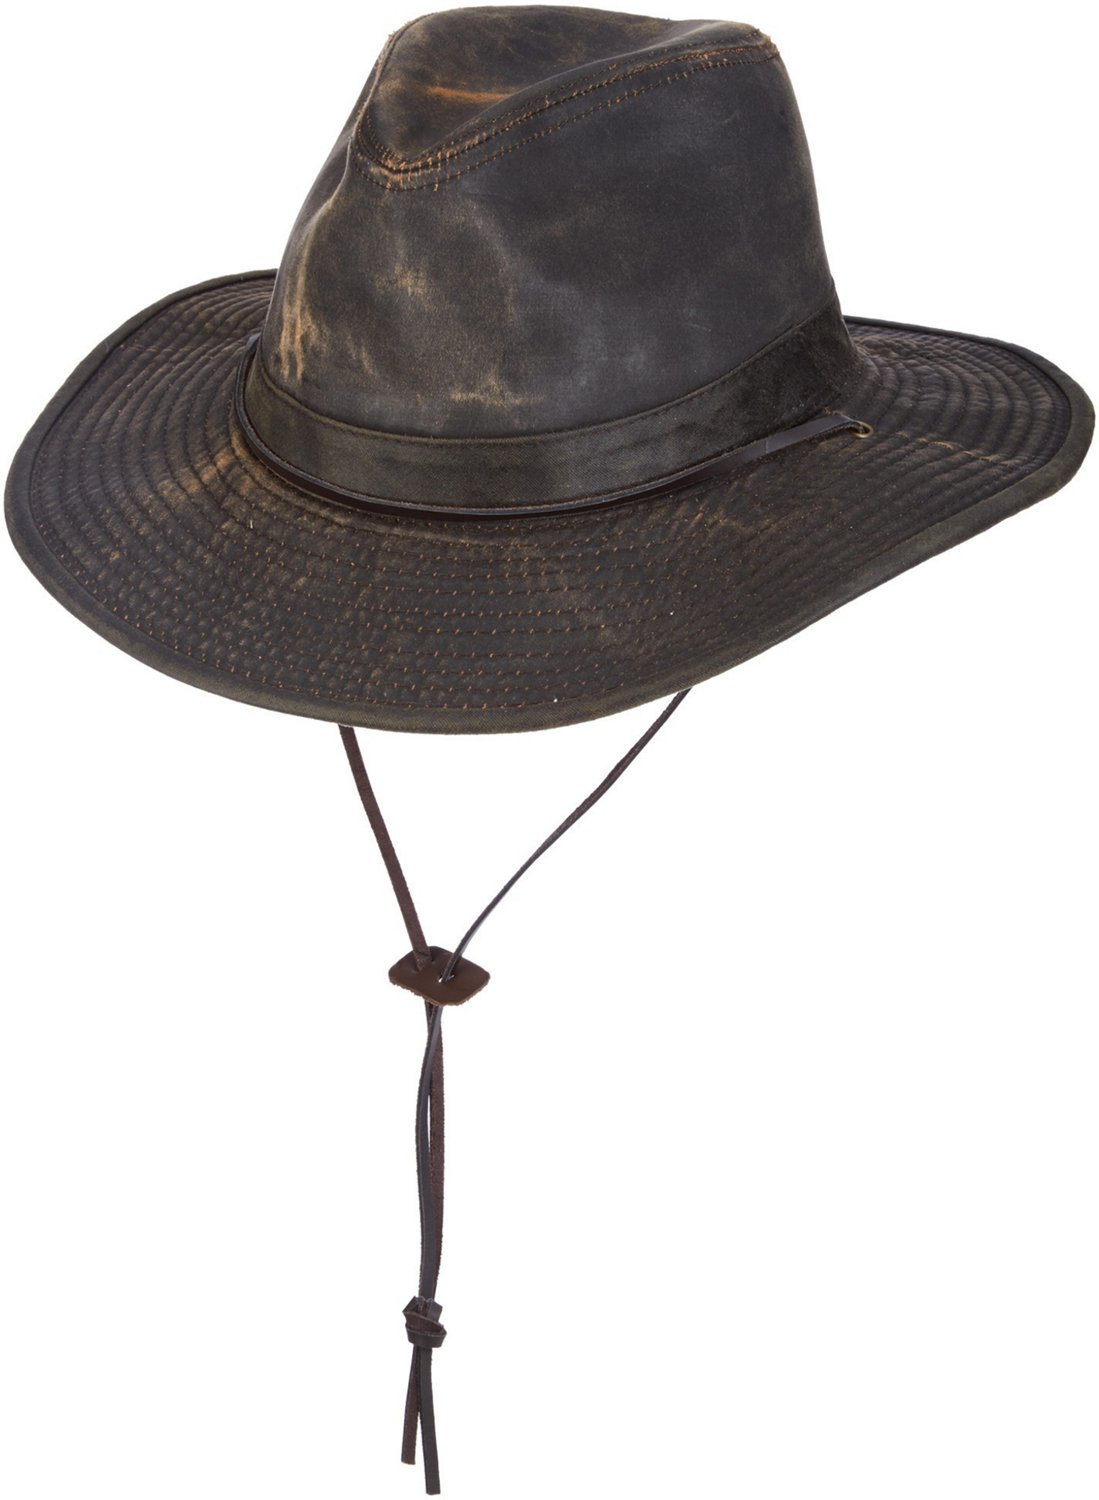 Dorfman Pacific 544717 Big Brim Safari Hat Olive - X-Large 